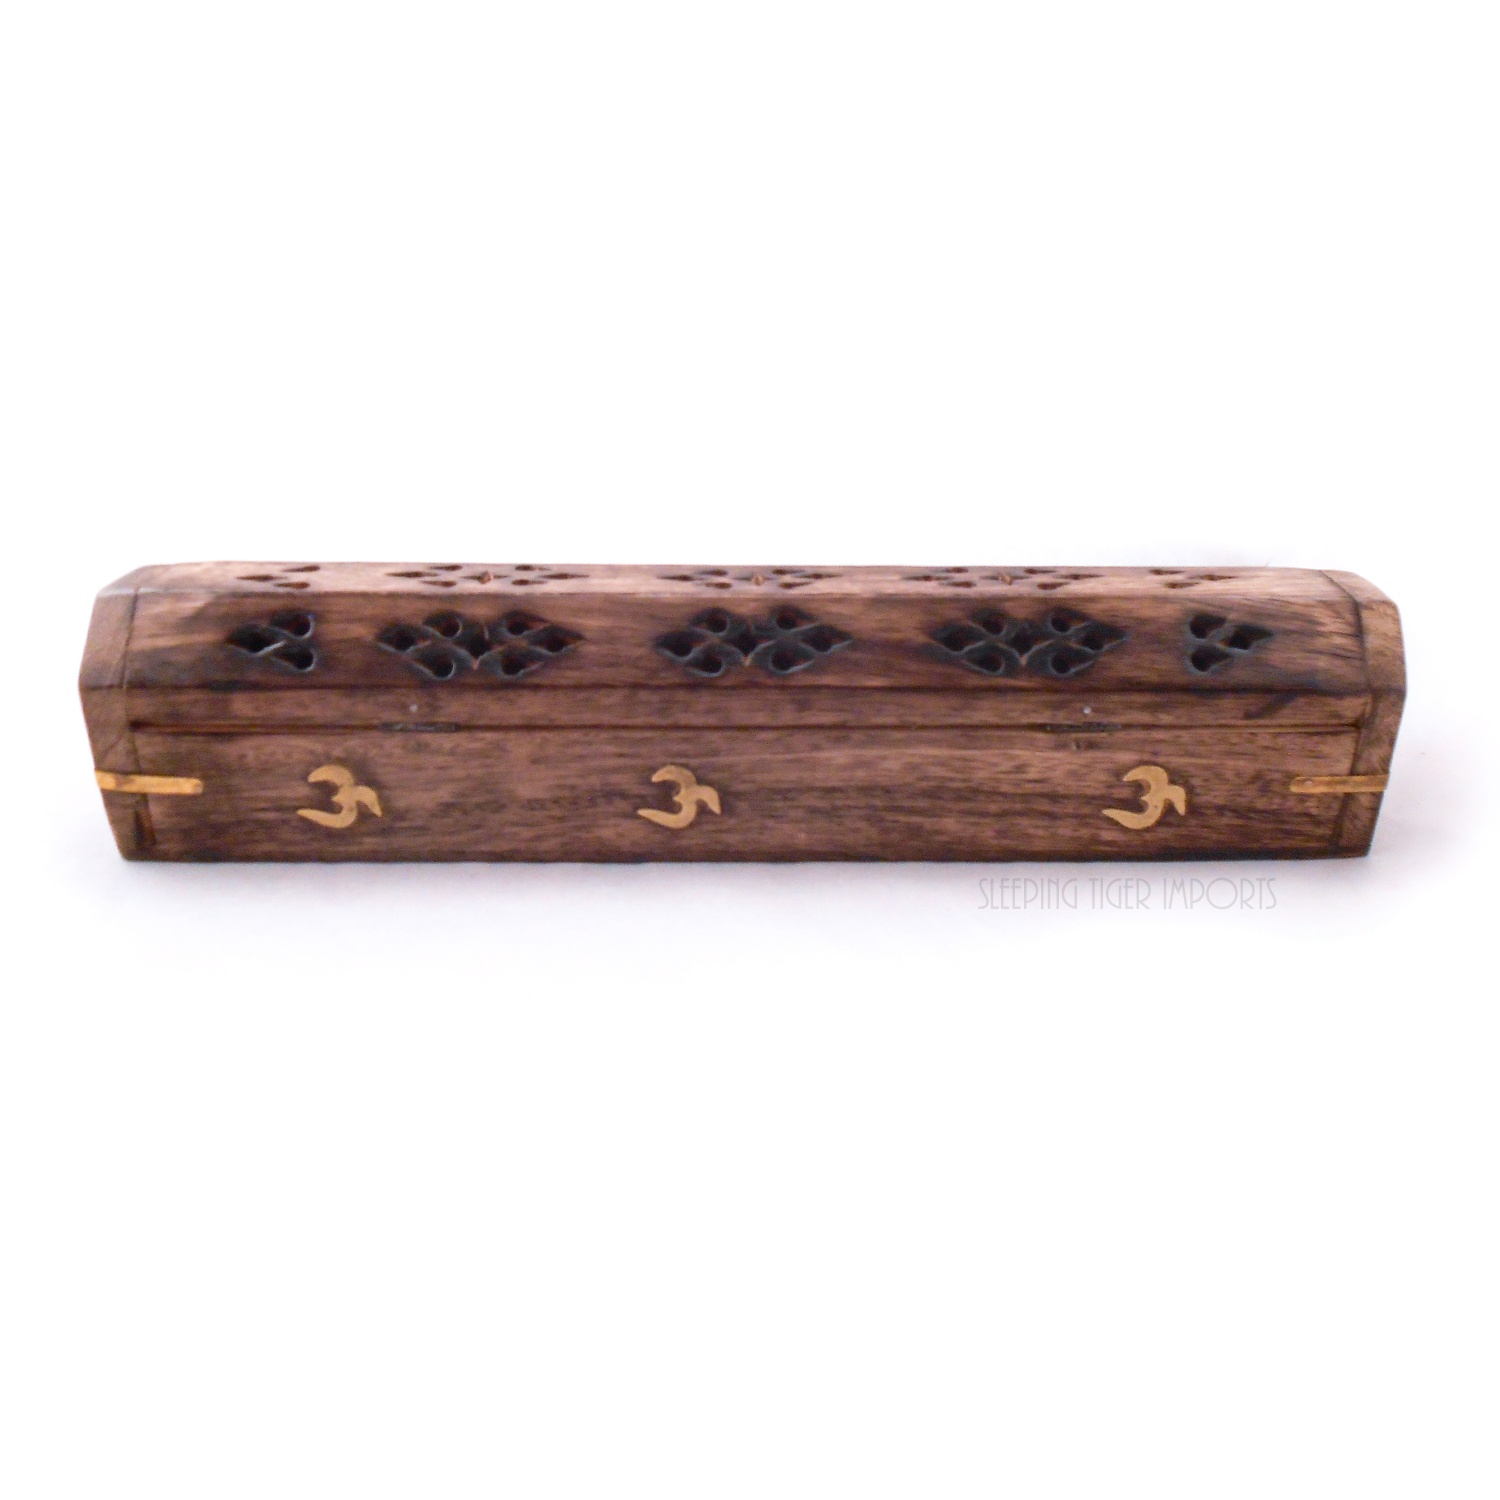 Ohm wood coffin box incense burner - sleepingtigerimports.com